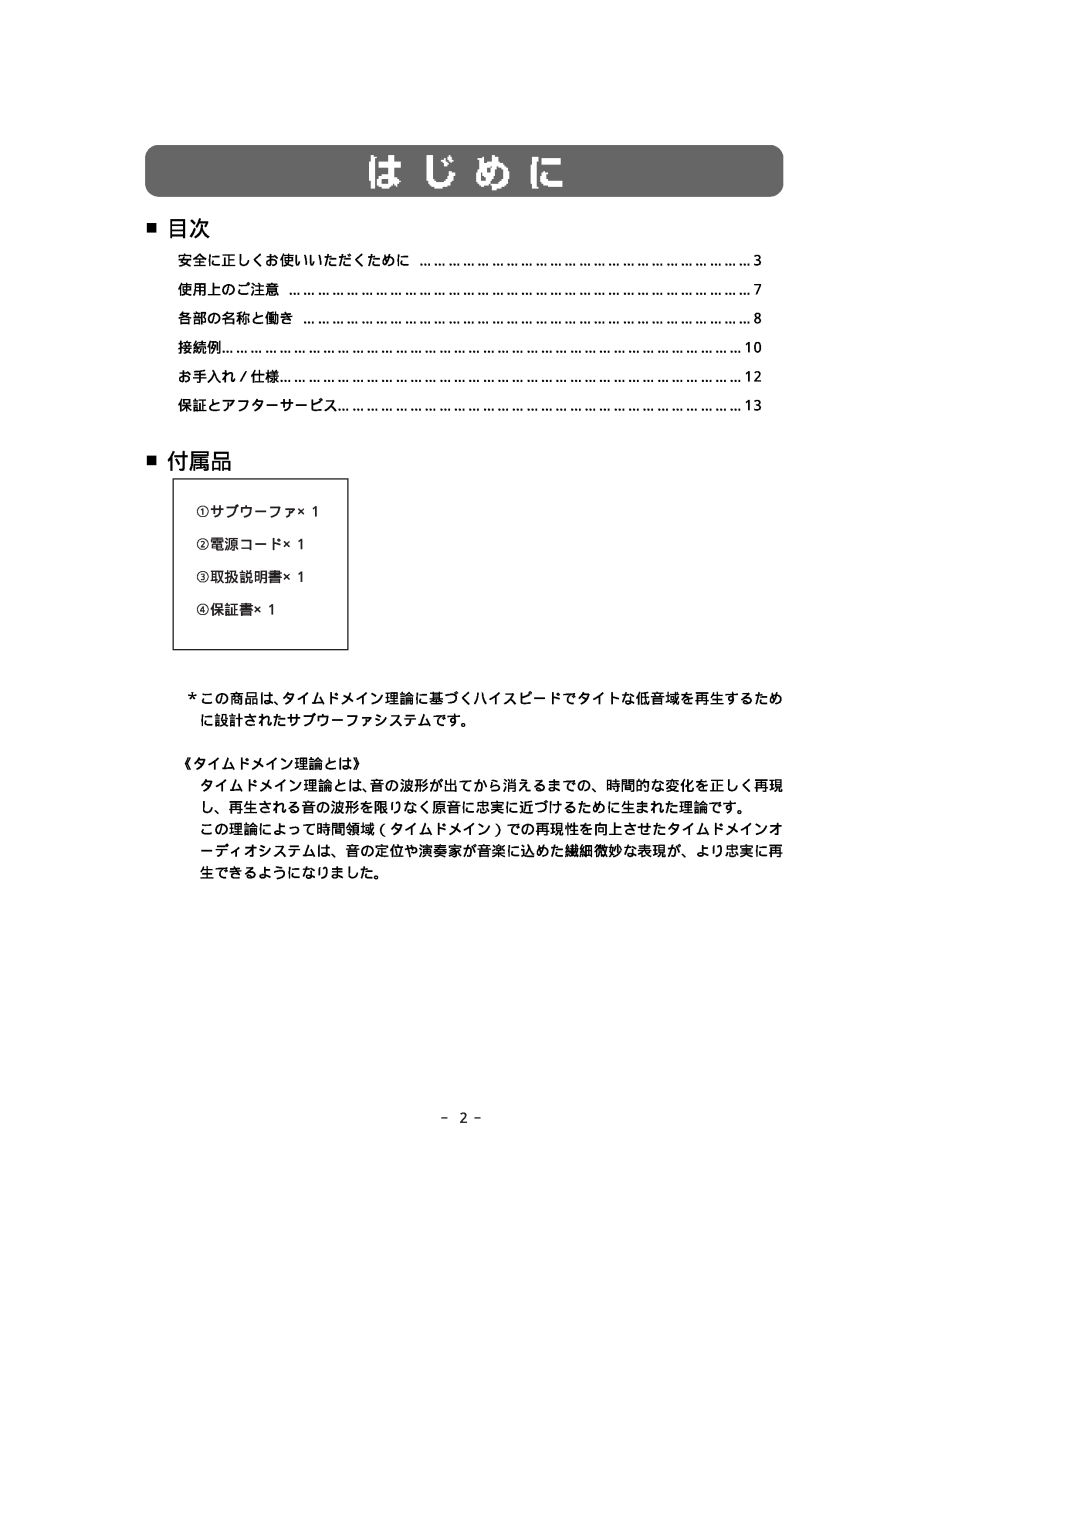 Fujitsu 316SW manual ①サブウーファ×1 ②電源コード×1 ③取扱説明書×1 ④保証書×1, － 2 － 